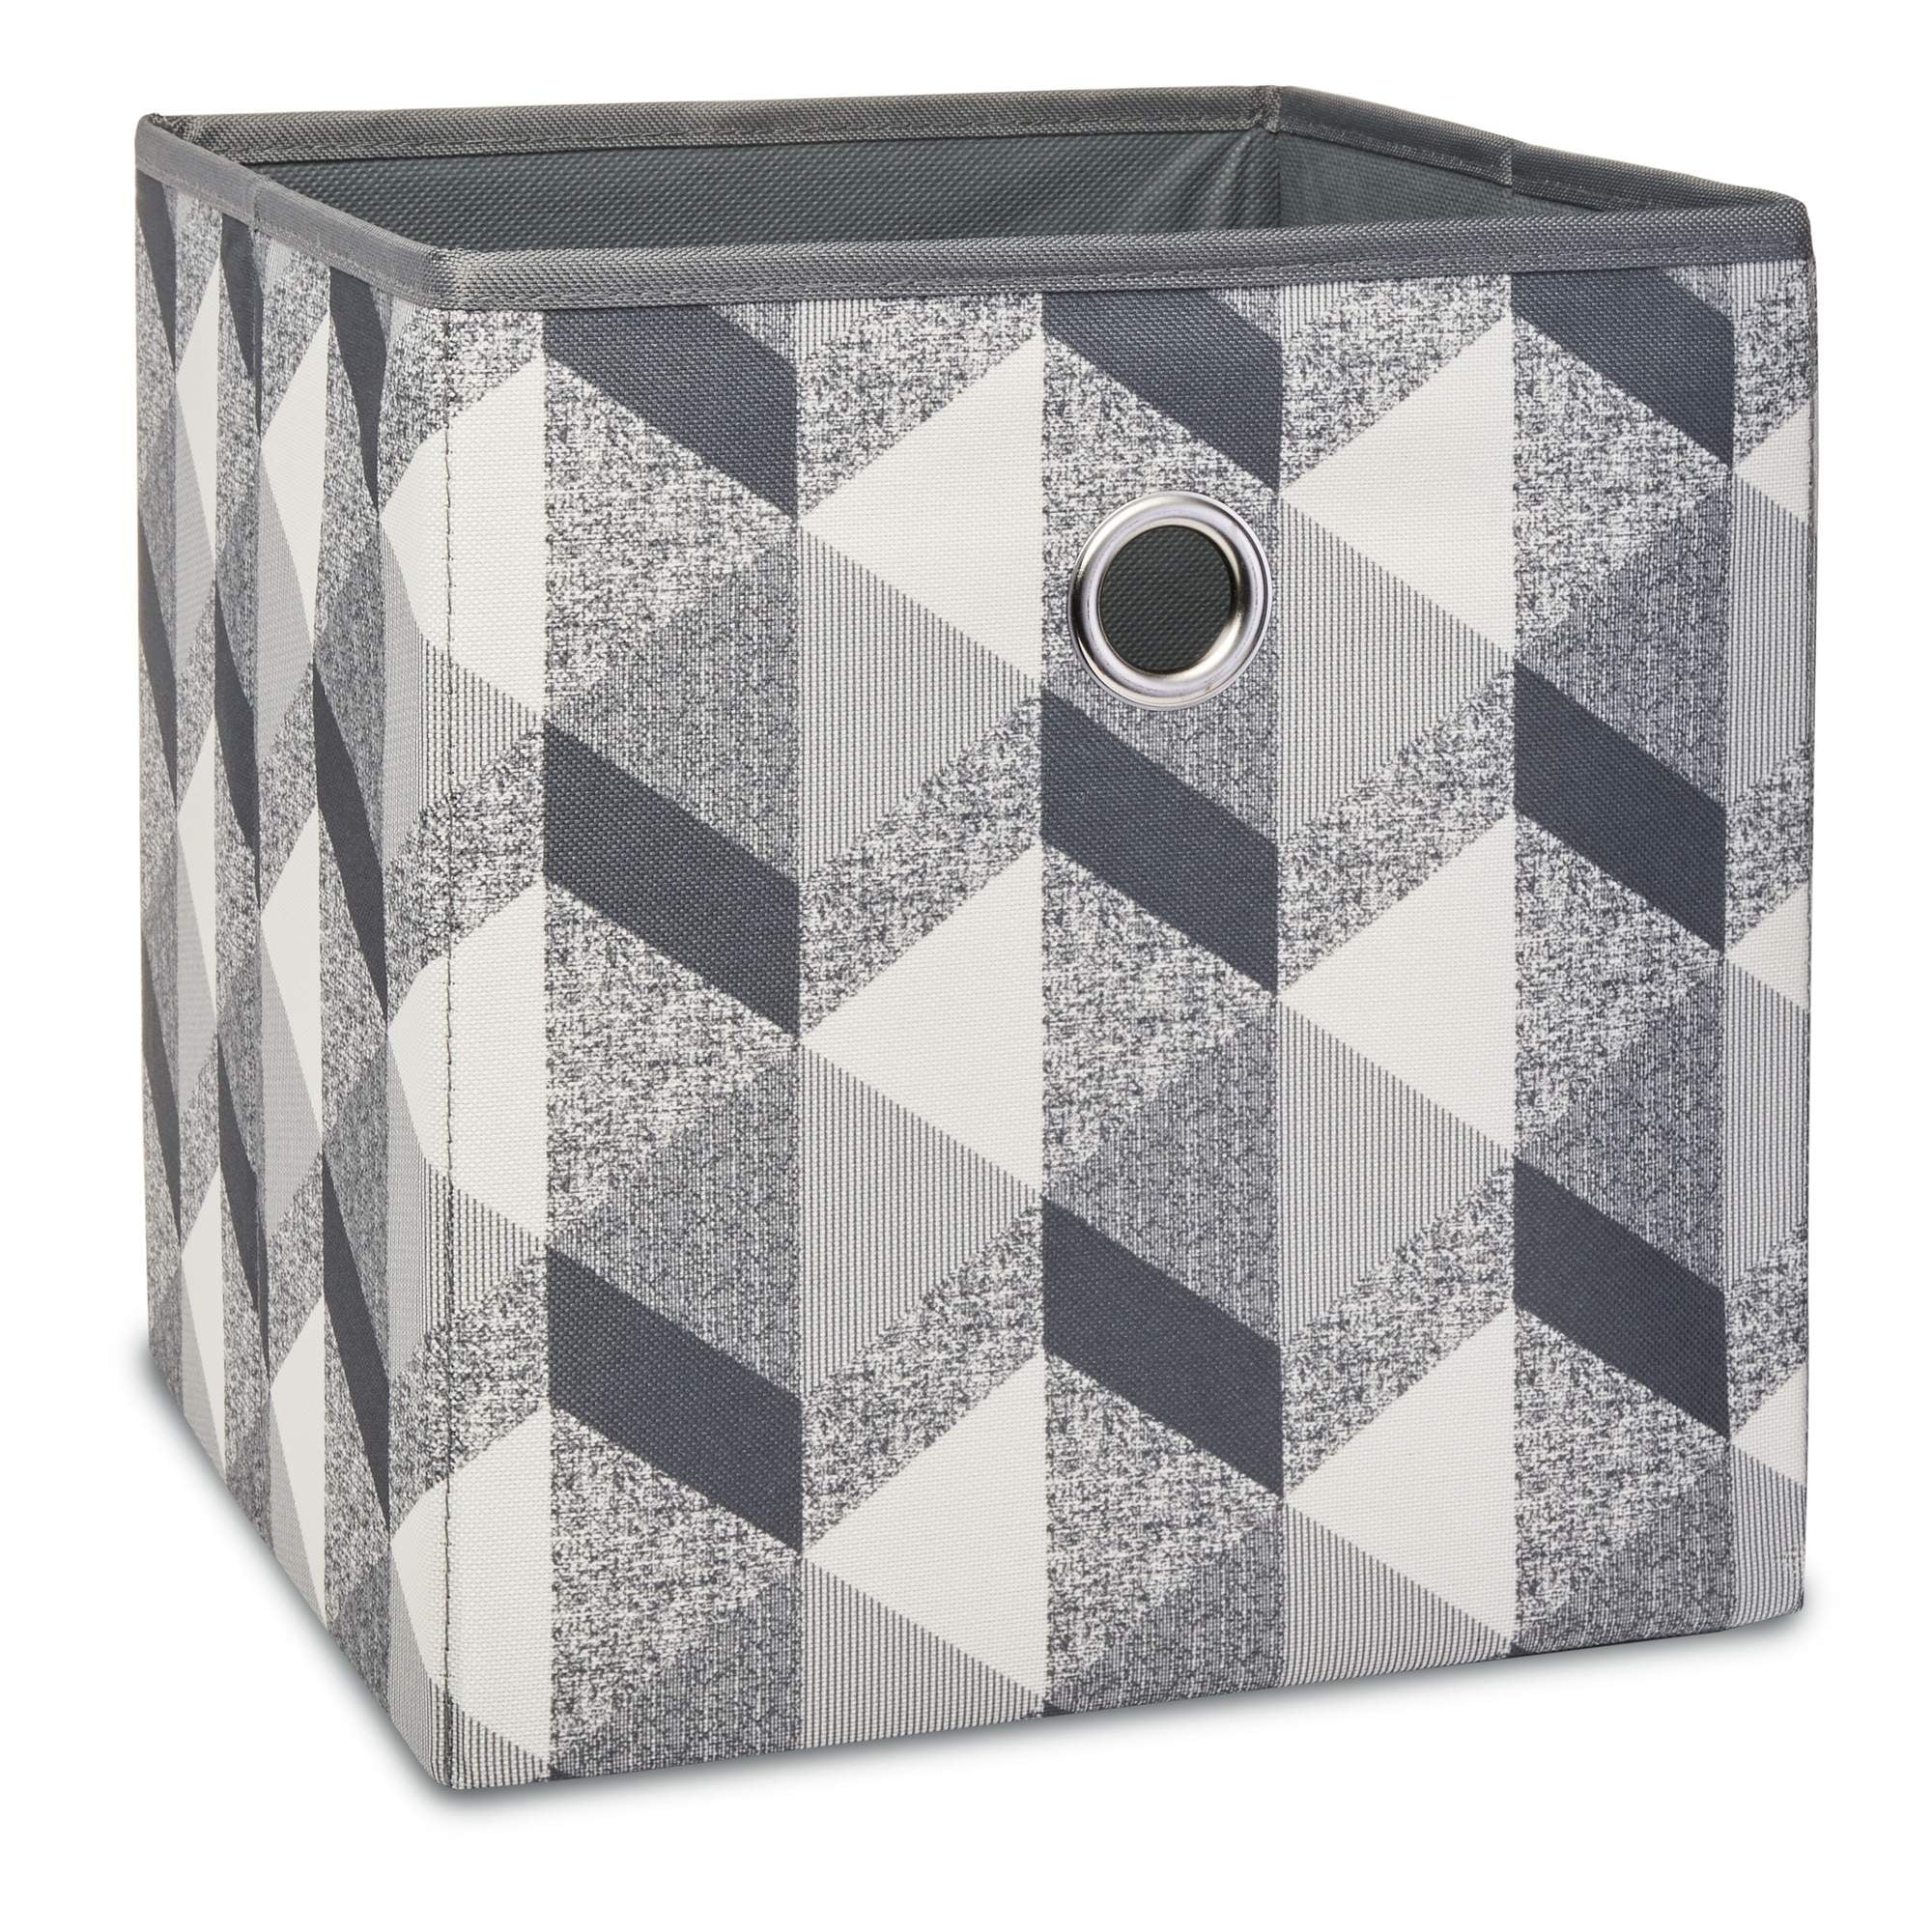 Teal Stripe Threshold Large Teal Gray Cube Storage Bin Striped Organizer 